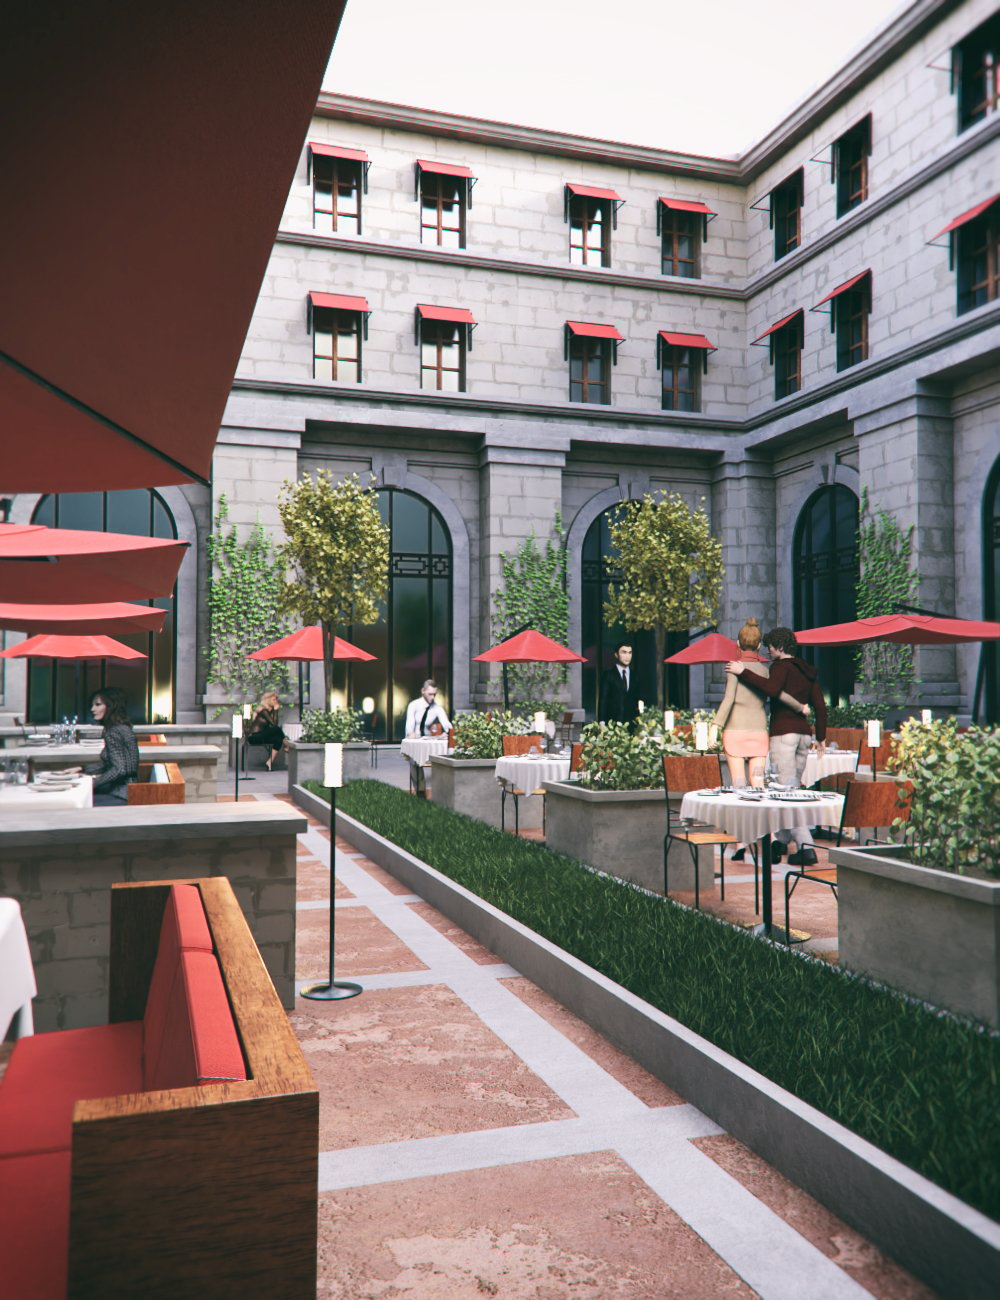 Restaurant Terrace by: Mely3D, 3D Models by Daz 3D